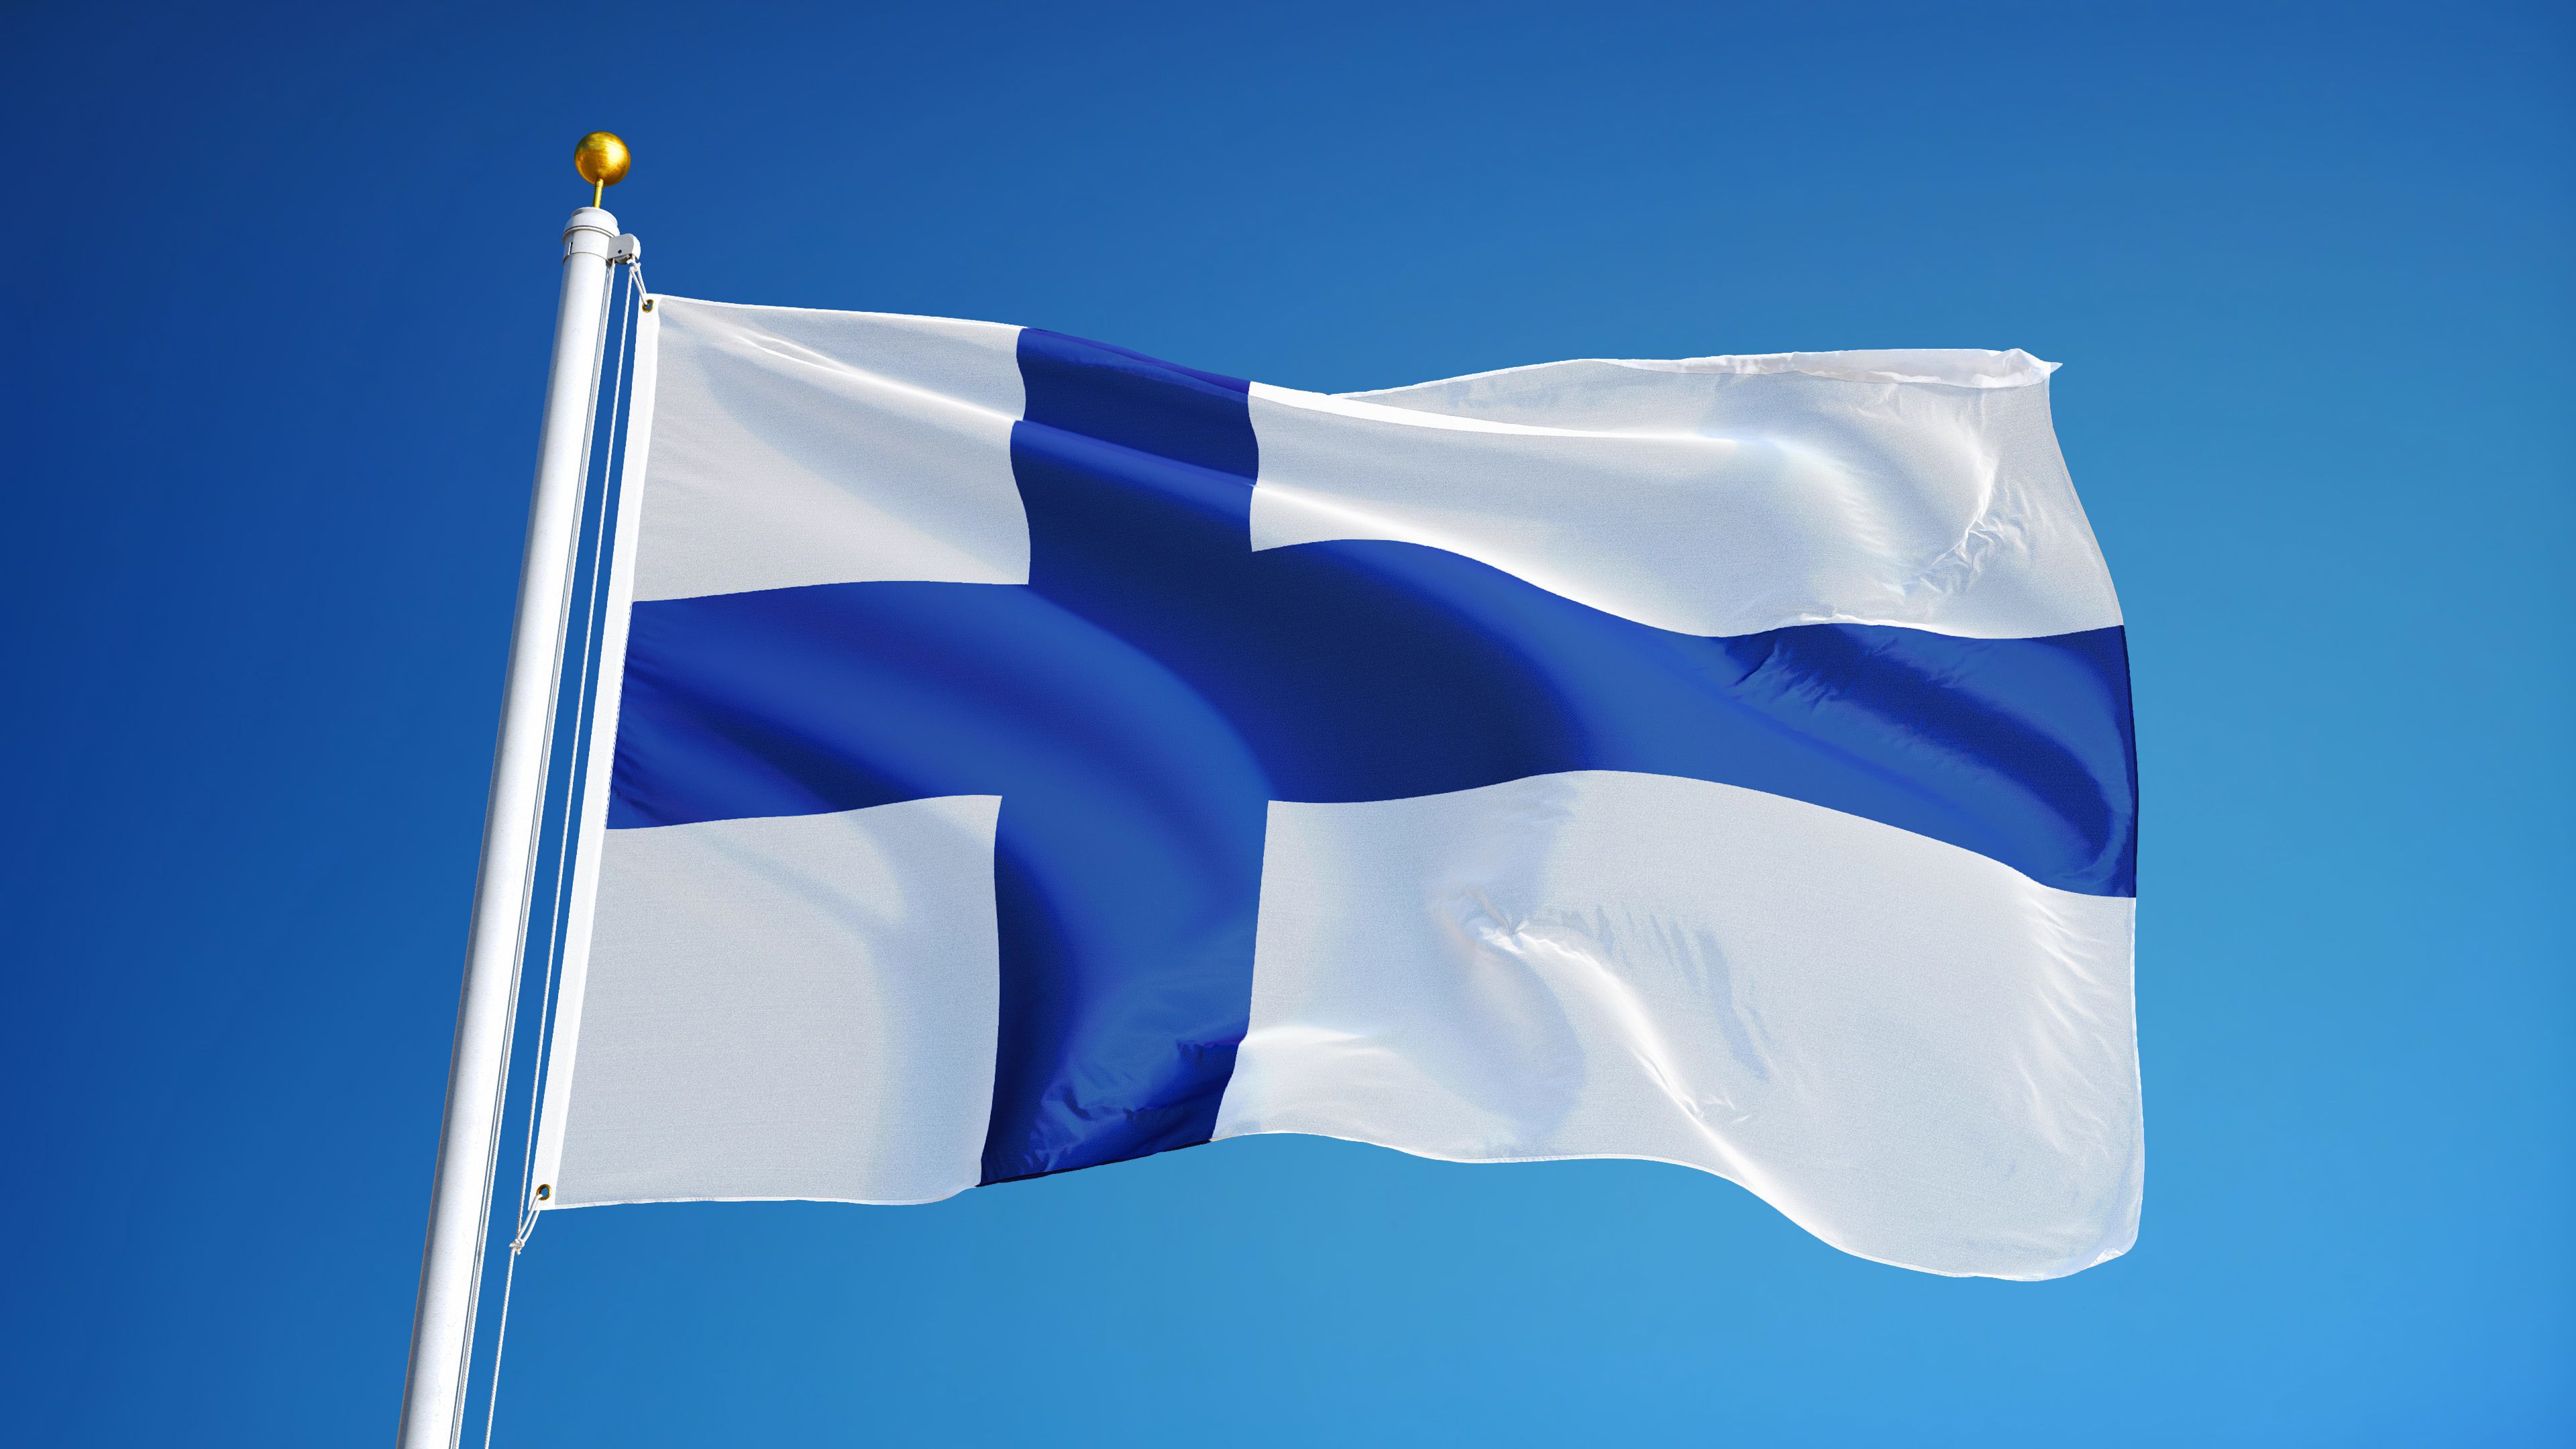 Finland flag waving against clean blue sky